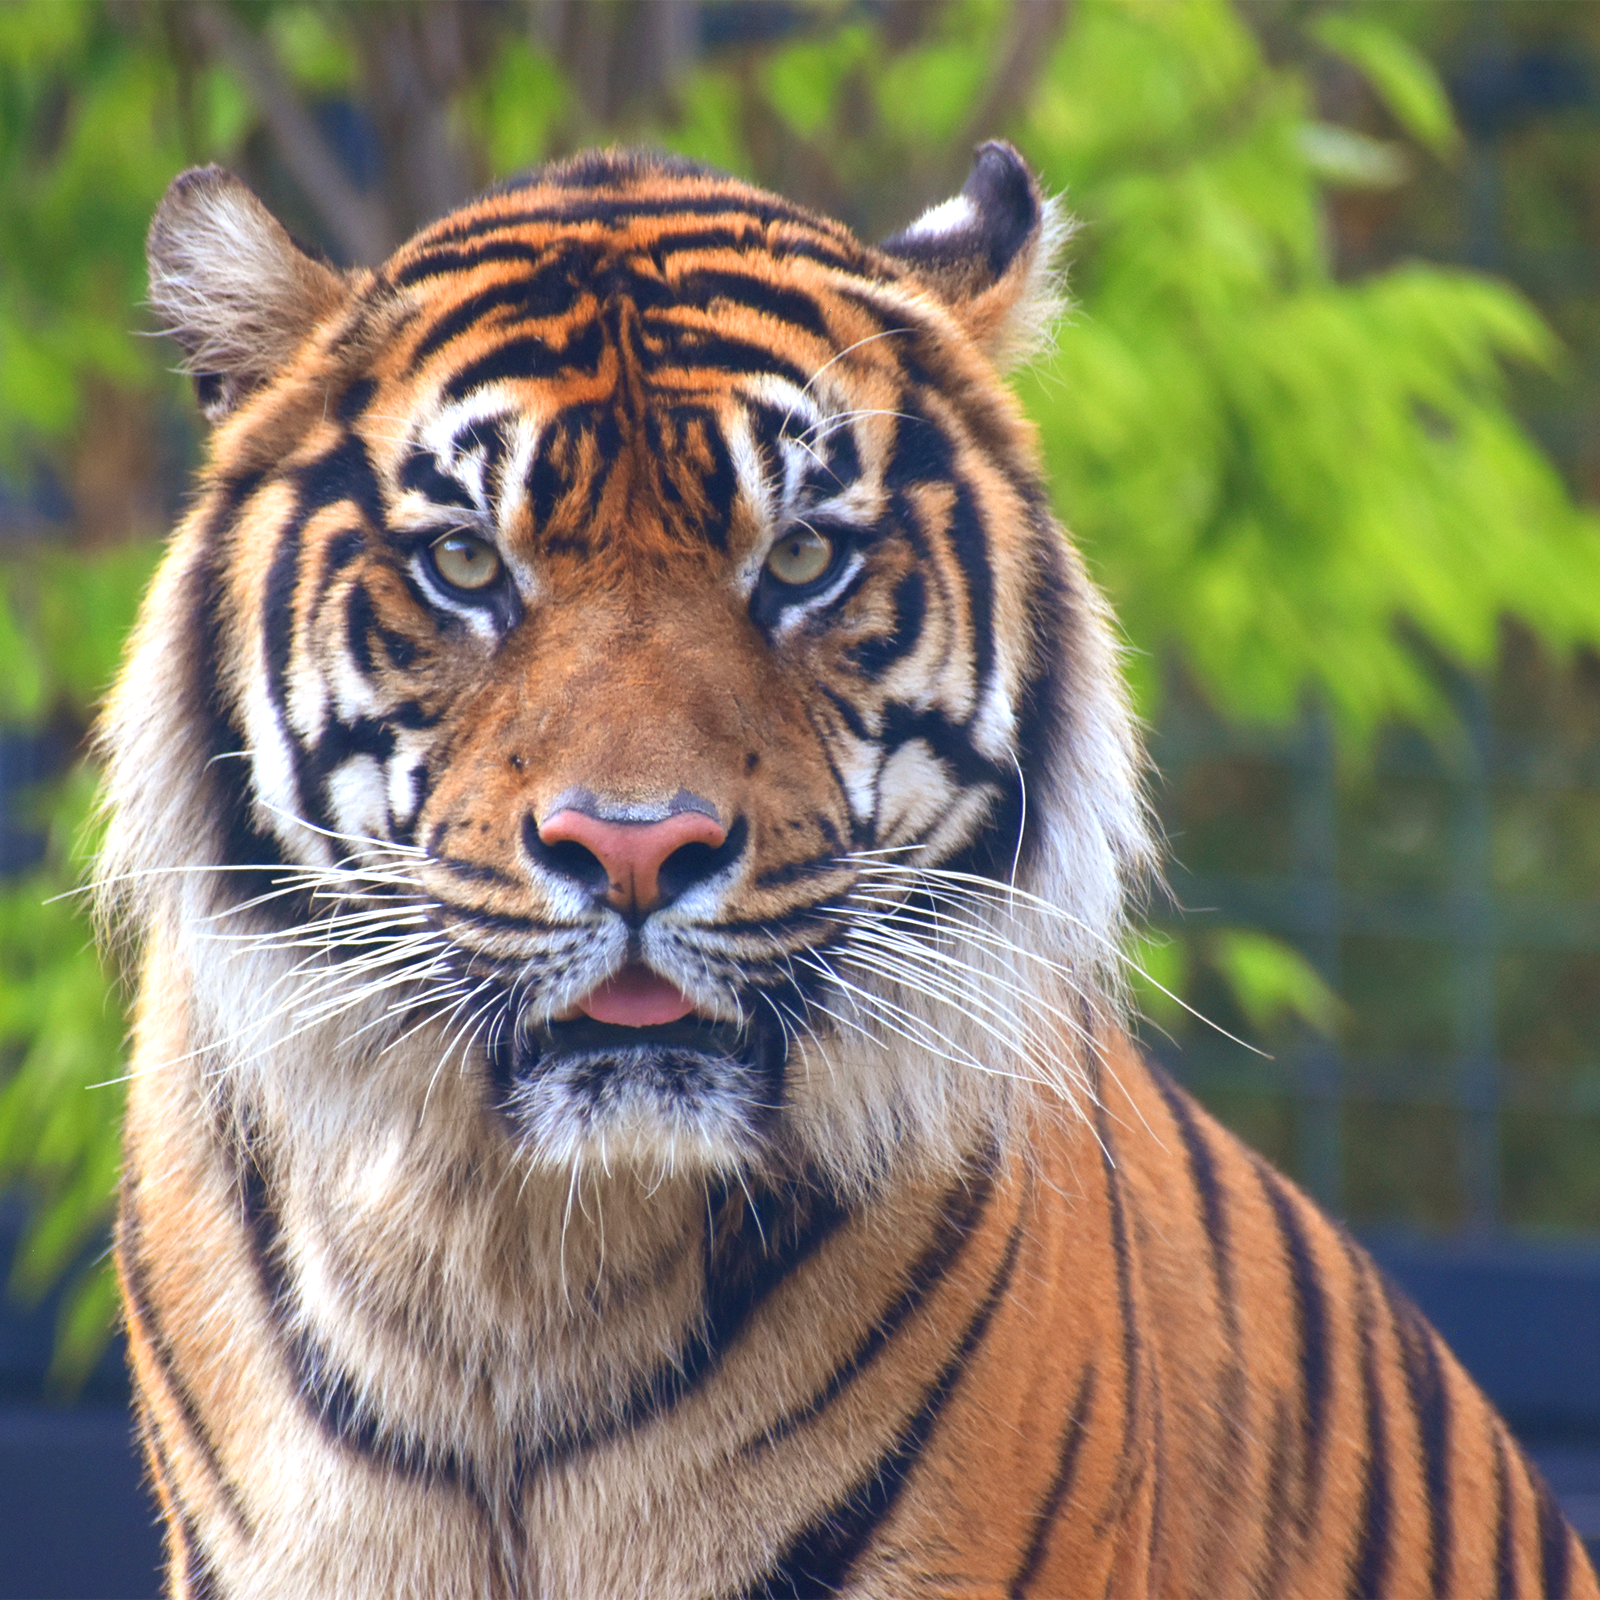 Bengal Tiger - Description, Habitat, Image, Diet, and Interesting